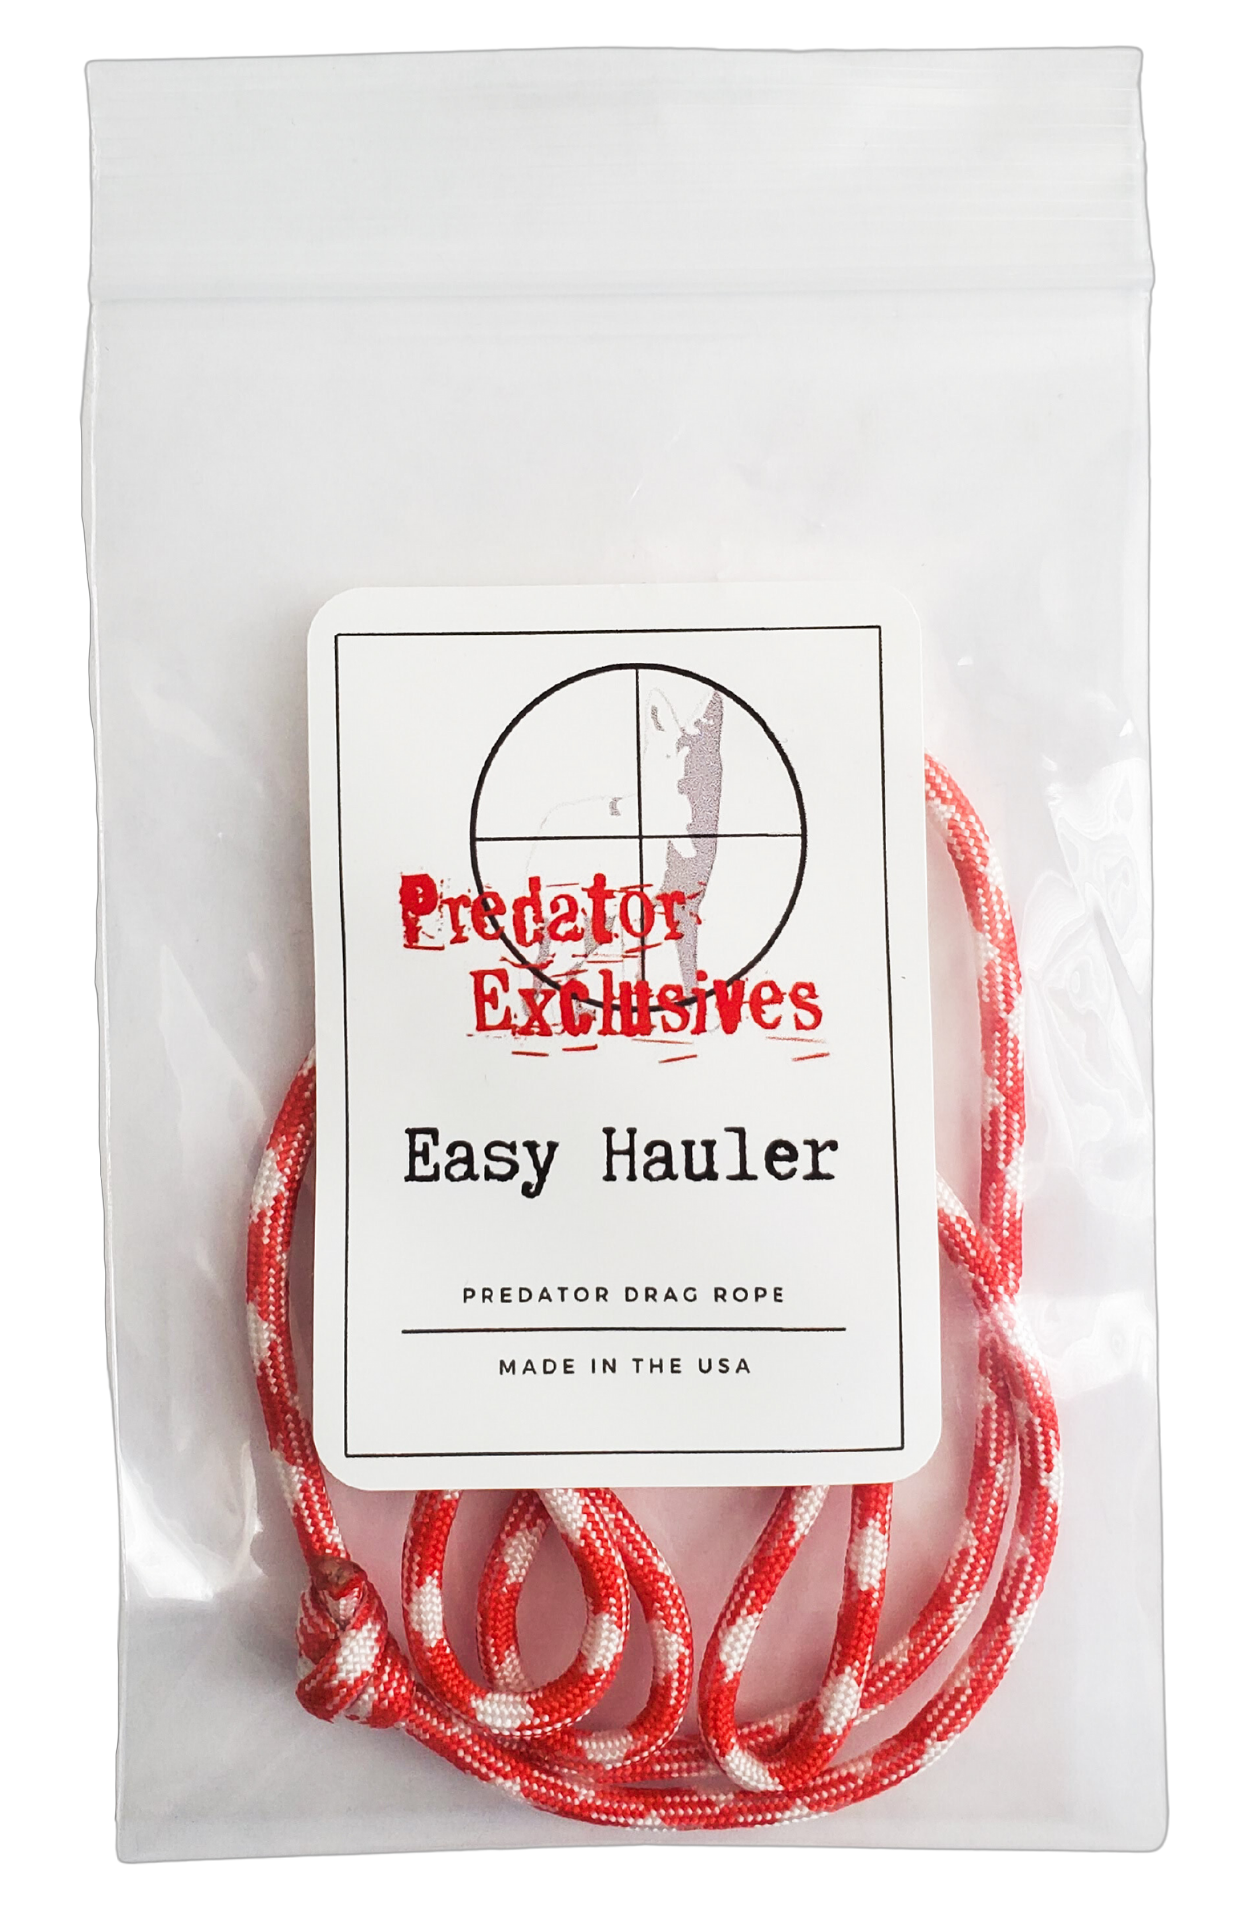 Predator Exclusives :: Easy Hauler Drag Rope